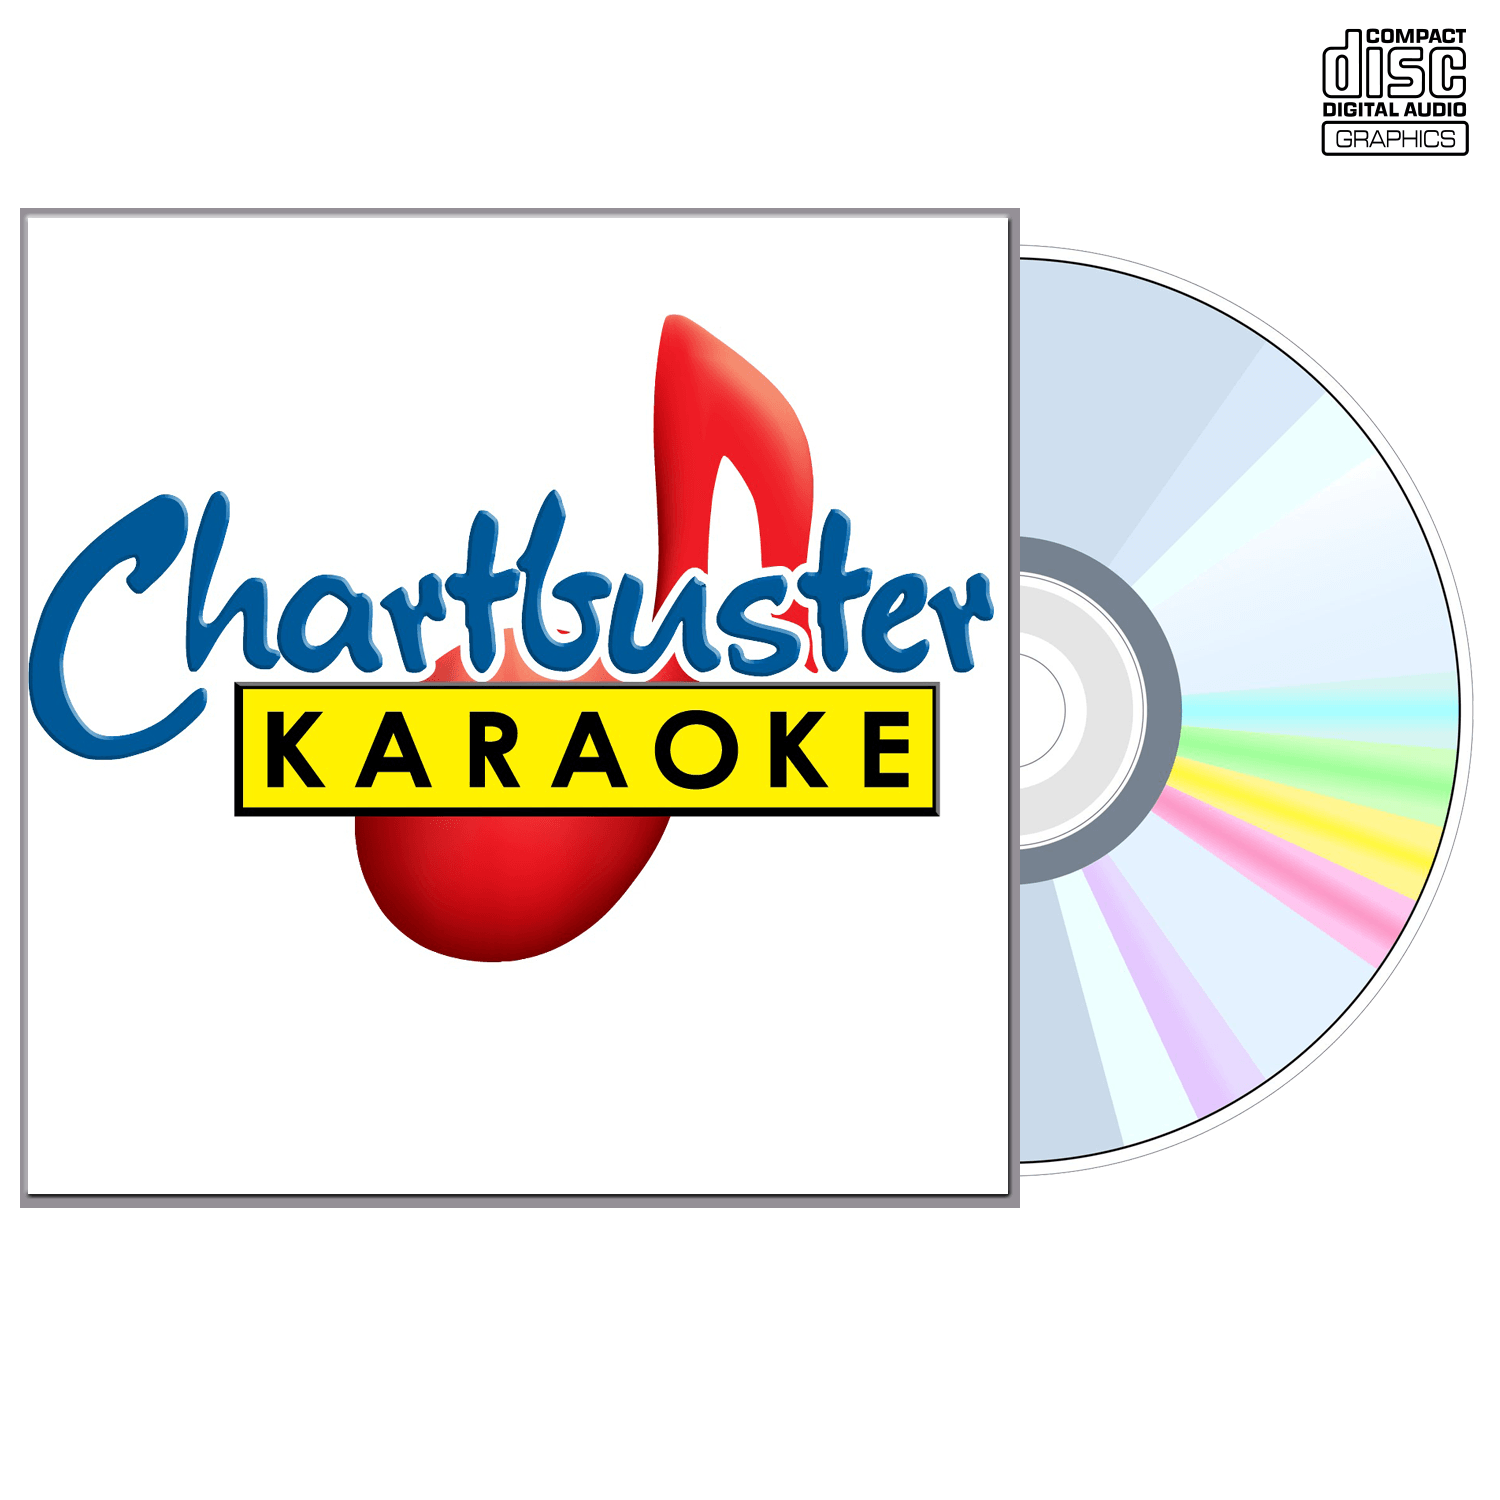 Tim Mcgraw Vol 2 - CD+G - Chartbuster Karaoke - Karaoke Home Entertainment